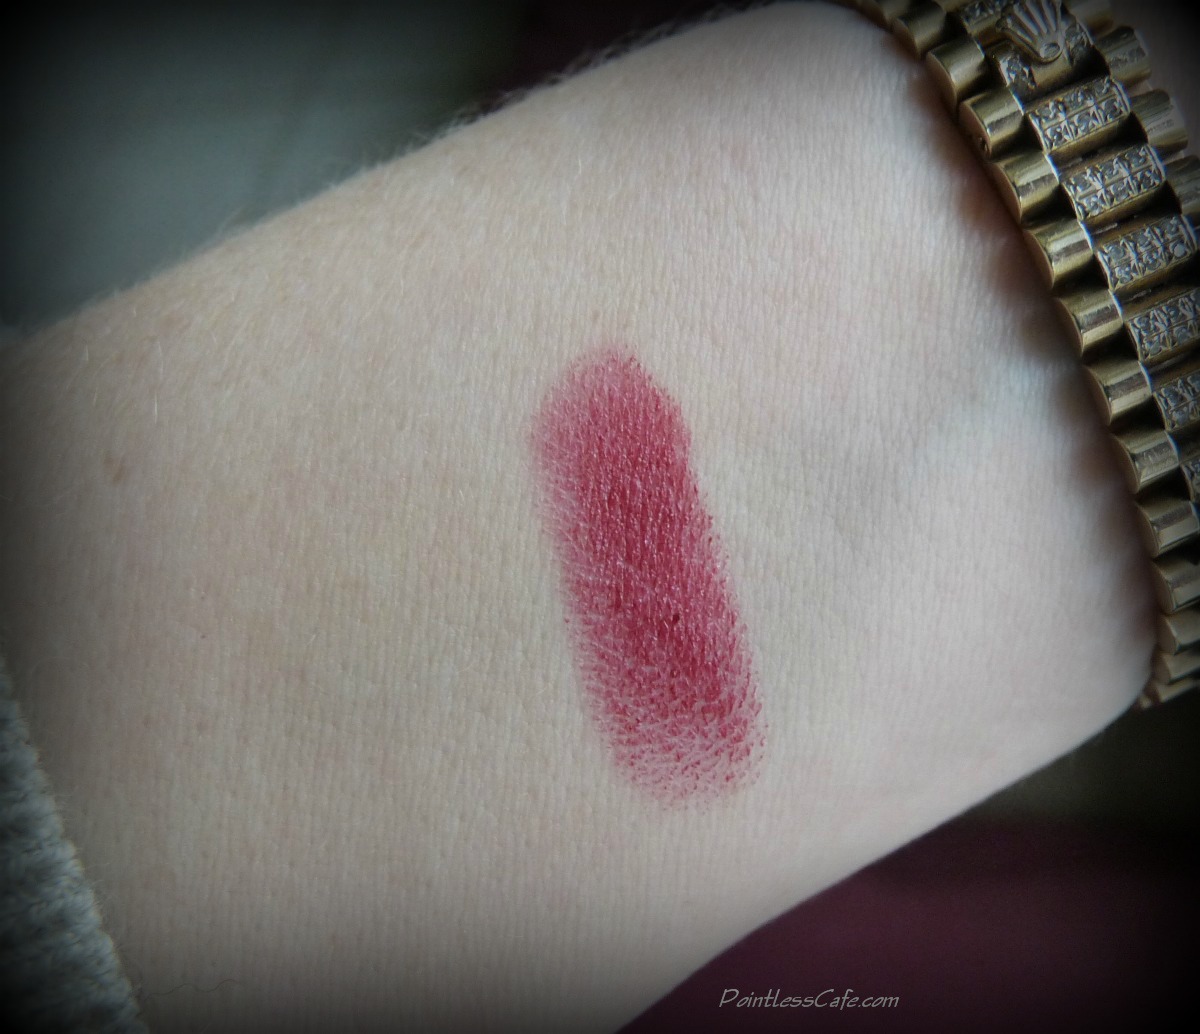 Chanel Rouge Coco Lipsticks: 5 Fun Facts